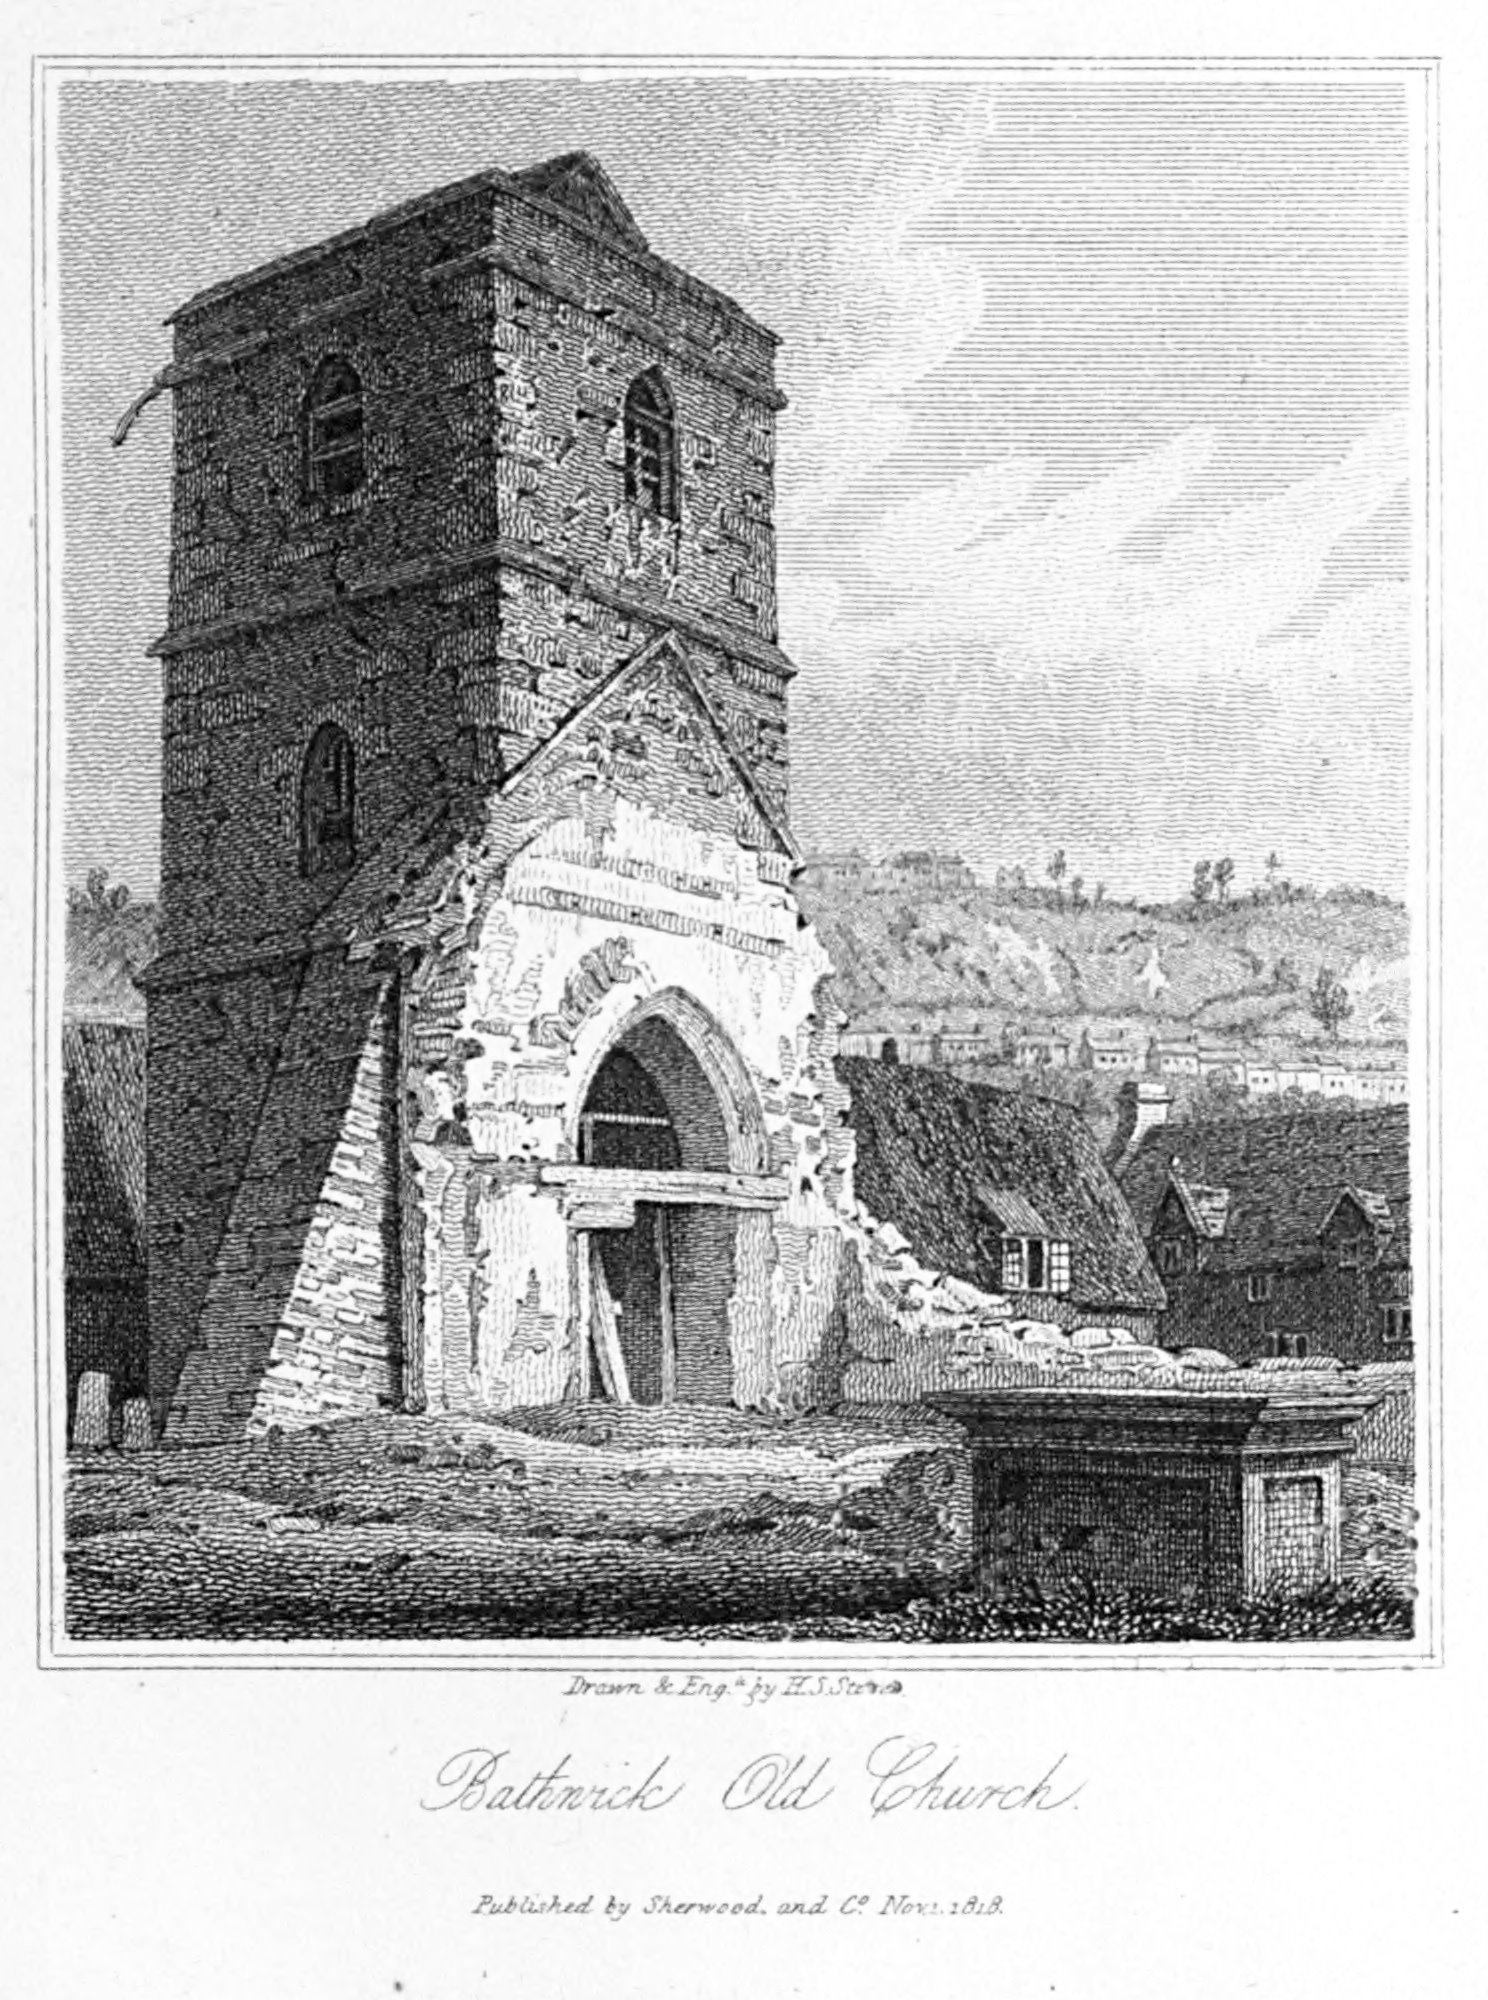 St Mary's Church, Bathwick